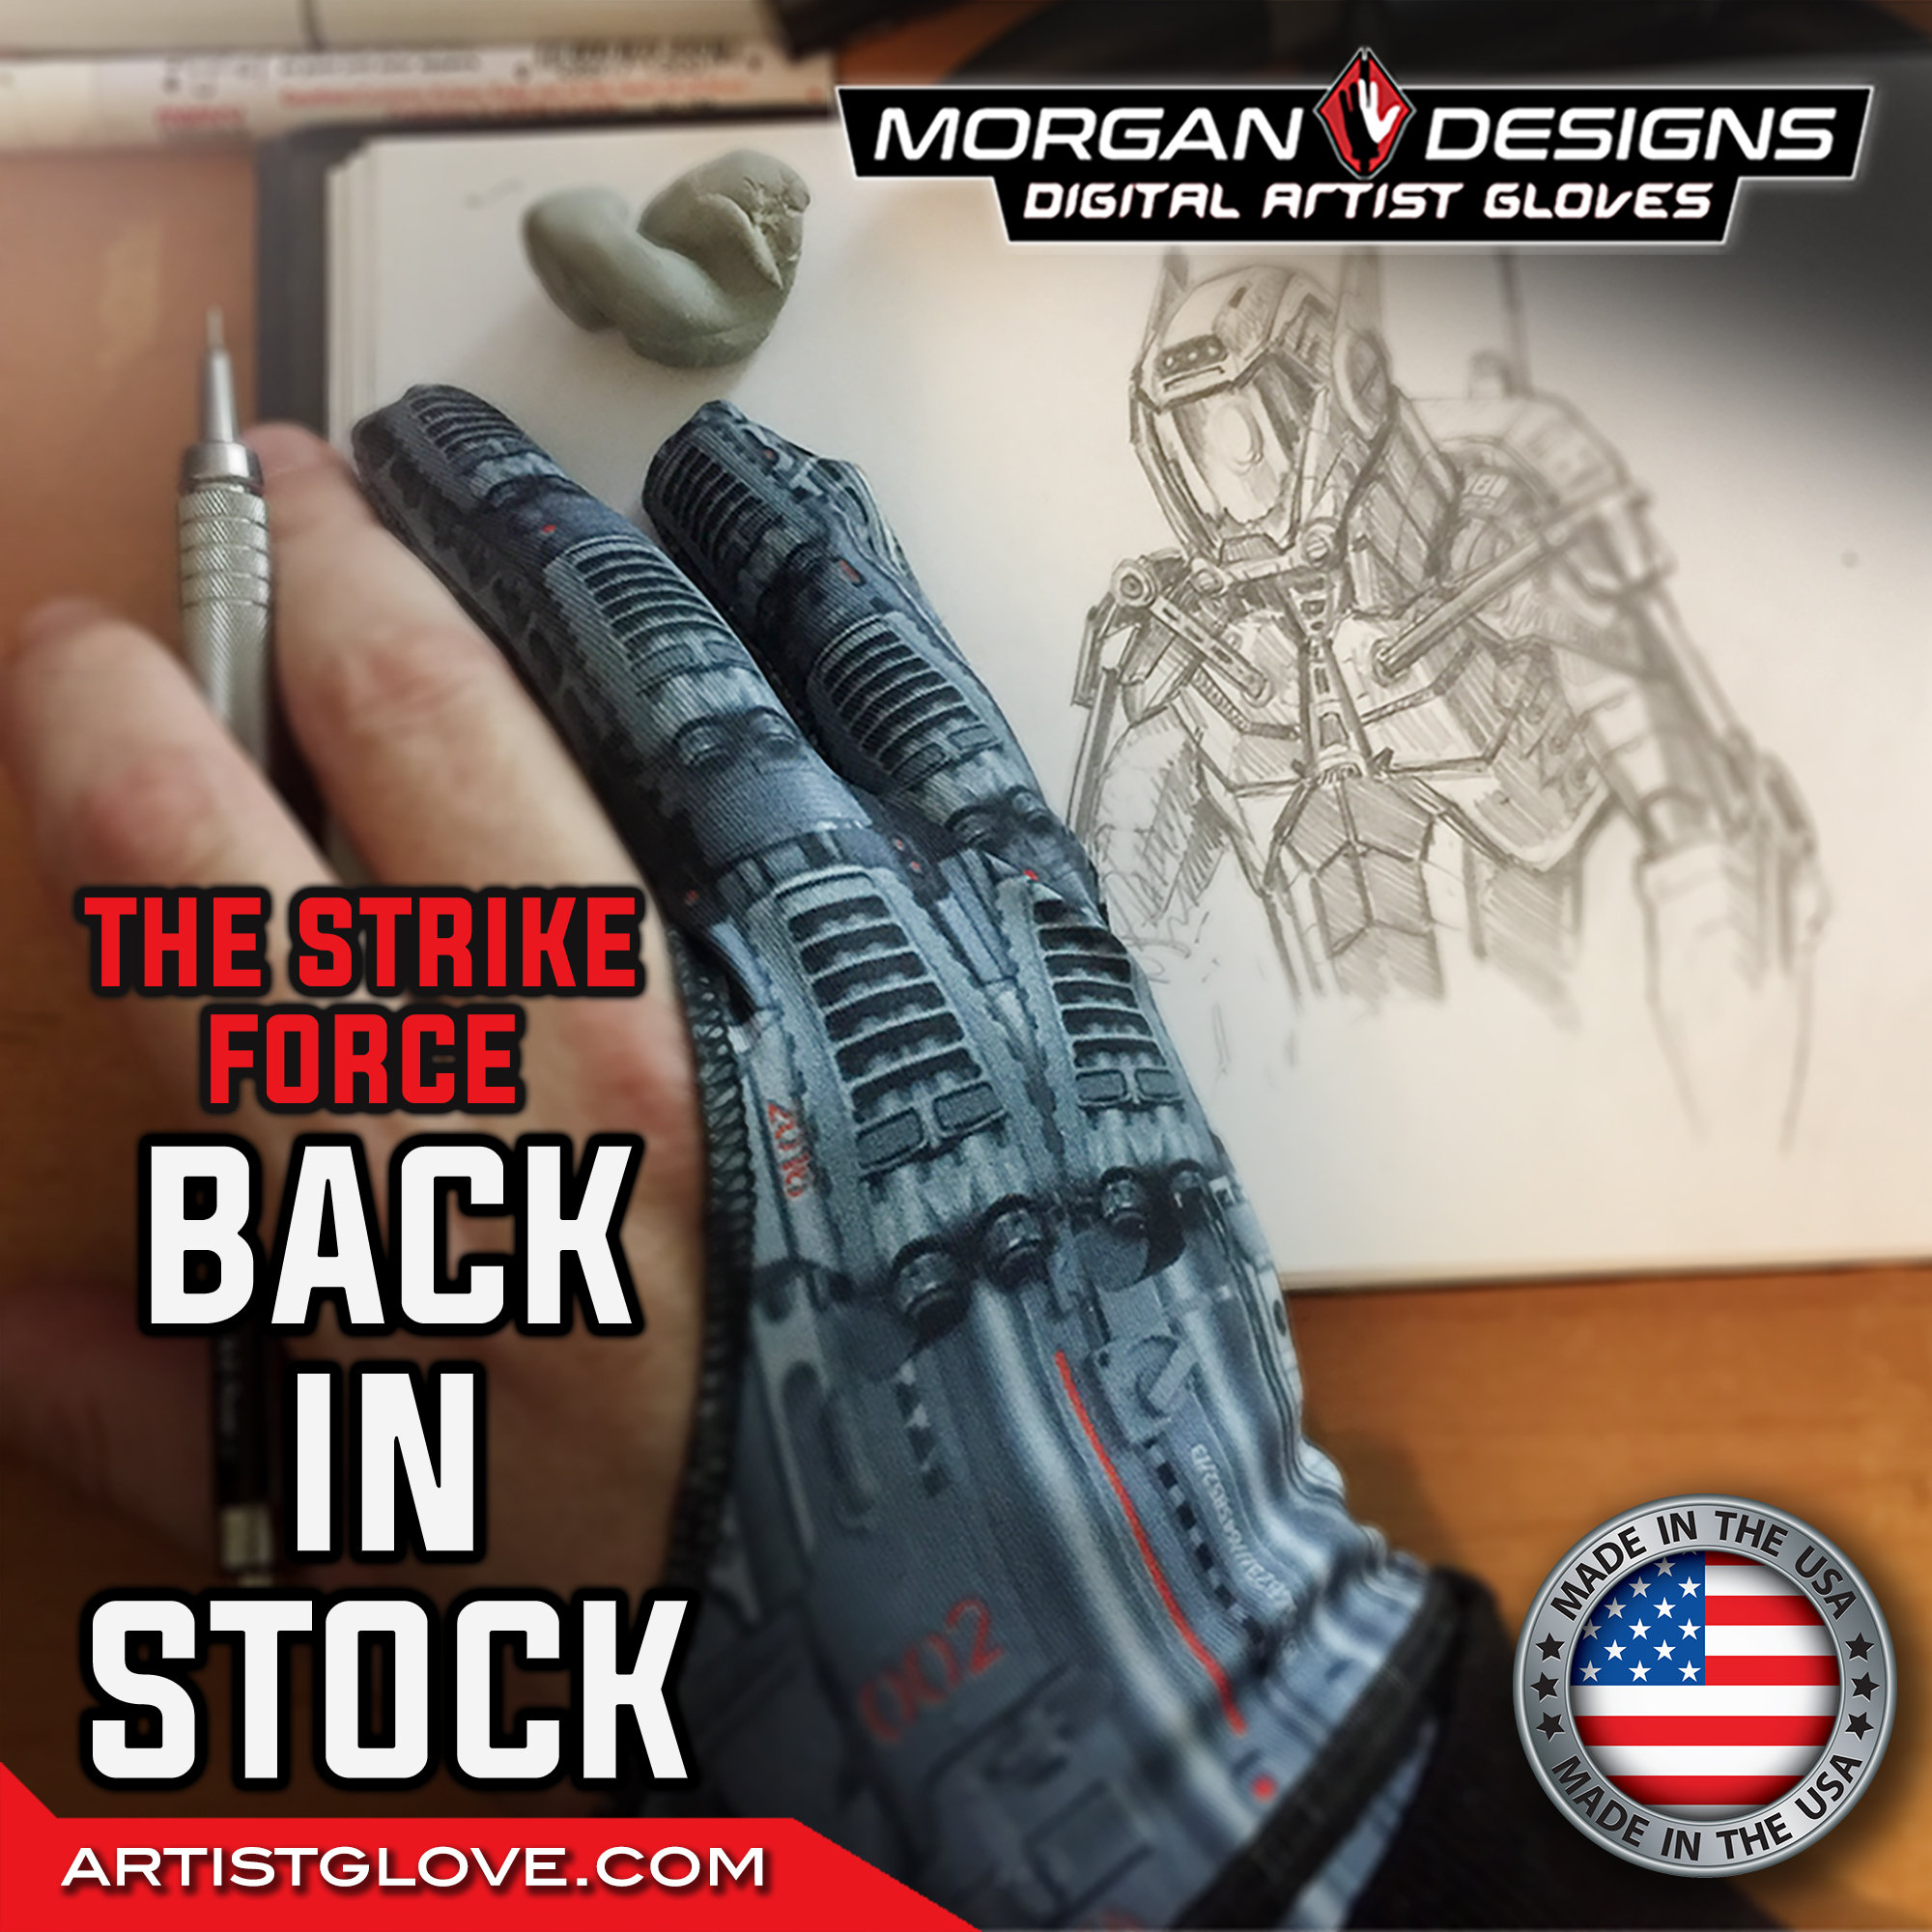 The Strike Force Artist Glove